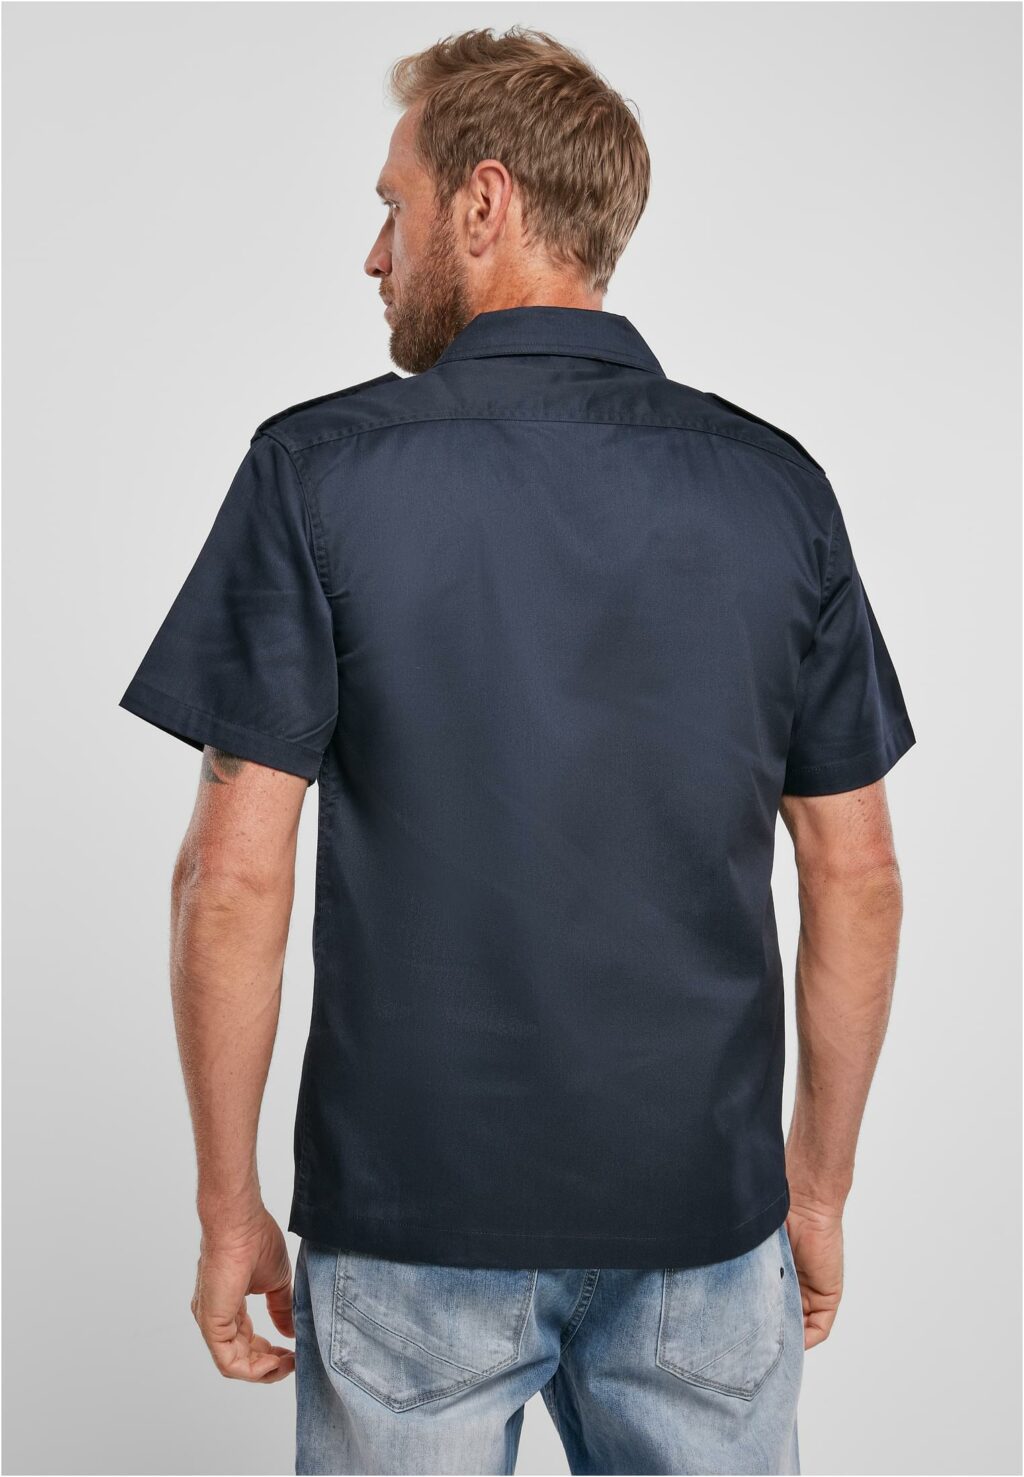 Brandit Short Sleeves US Shirt navy BD4101